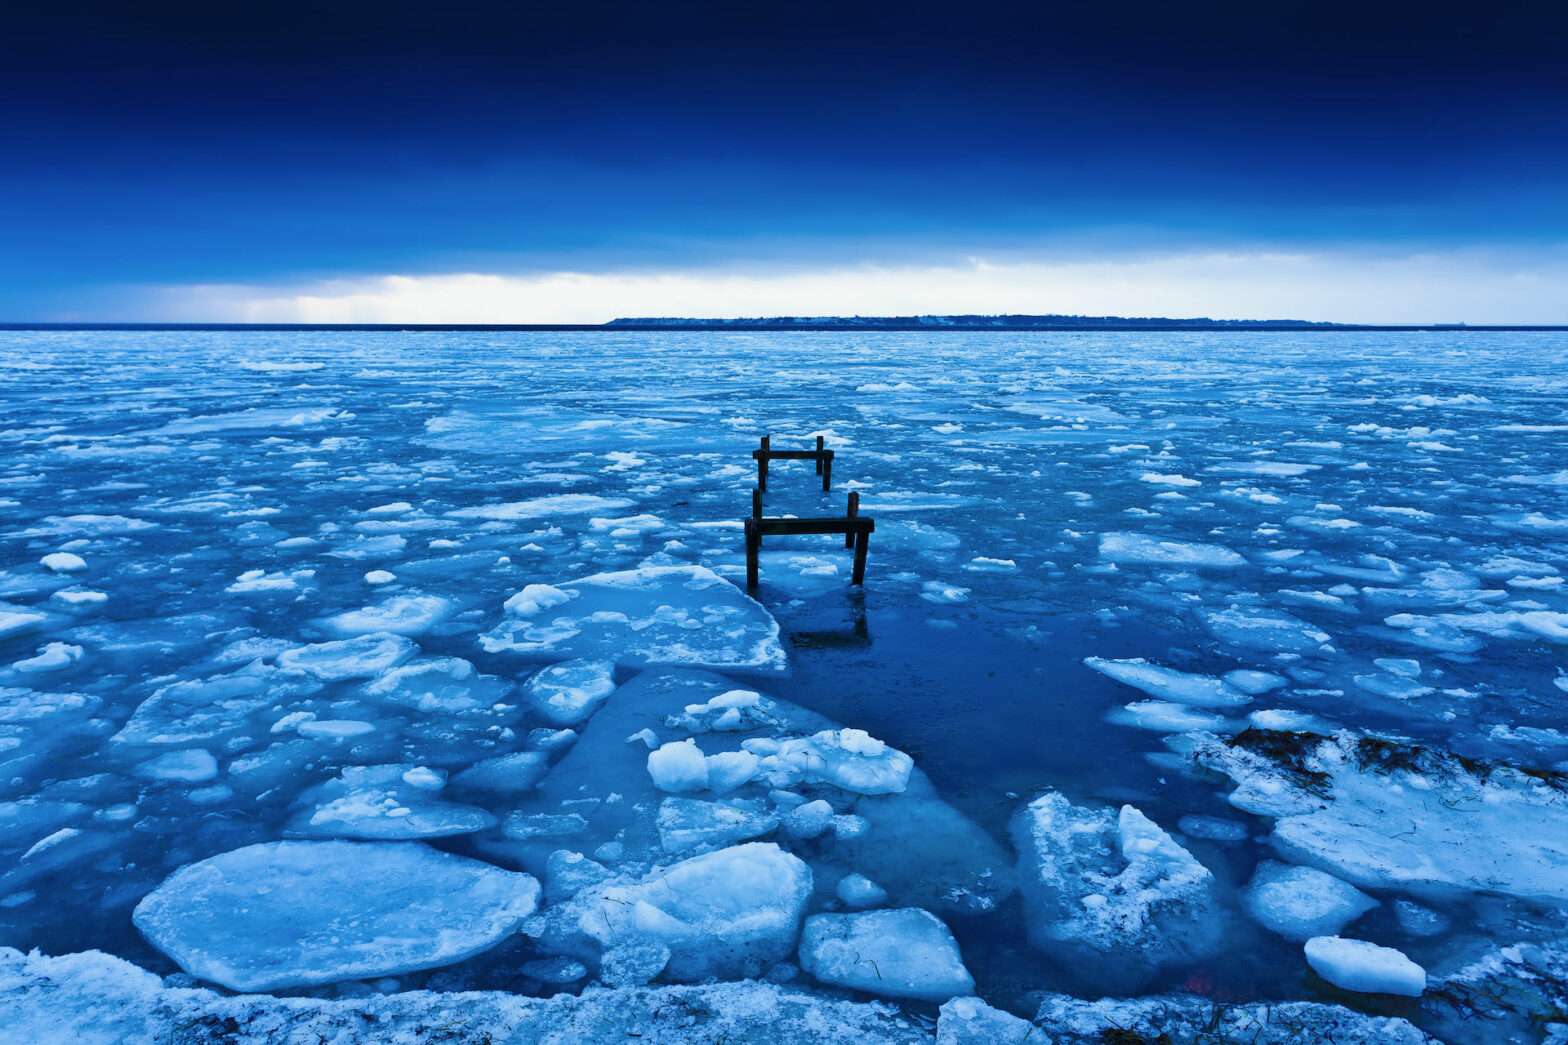 Sea of ice